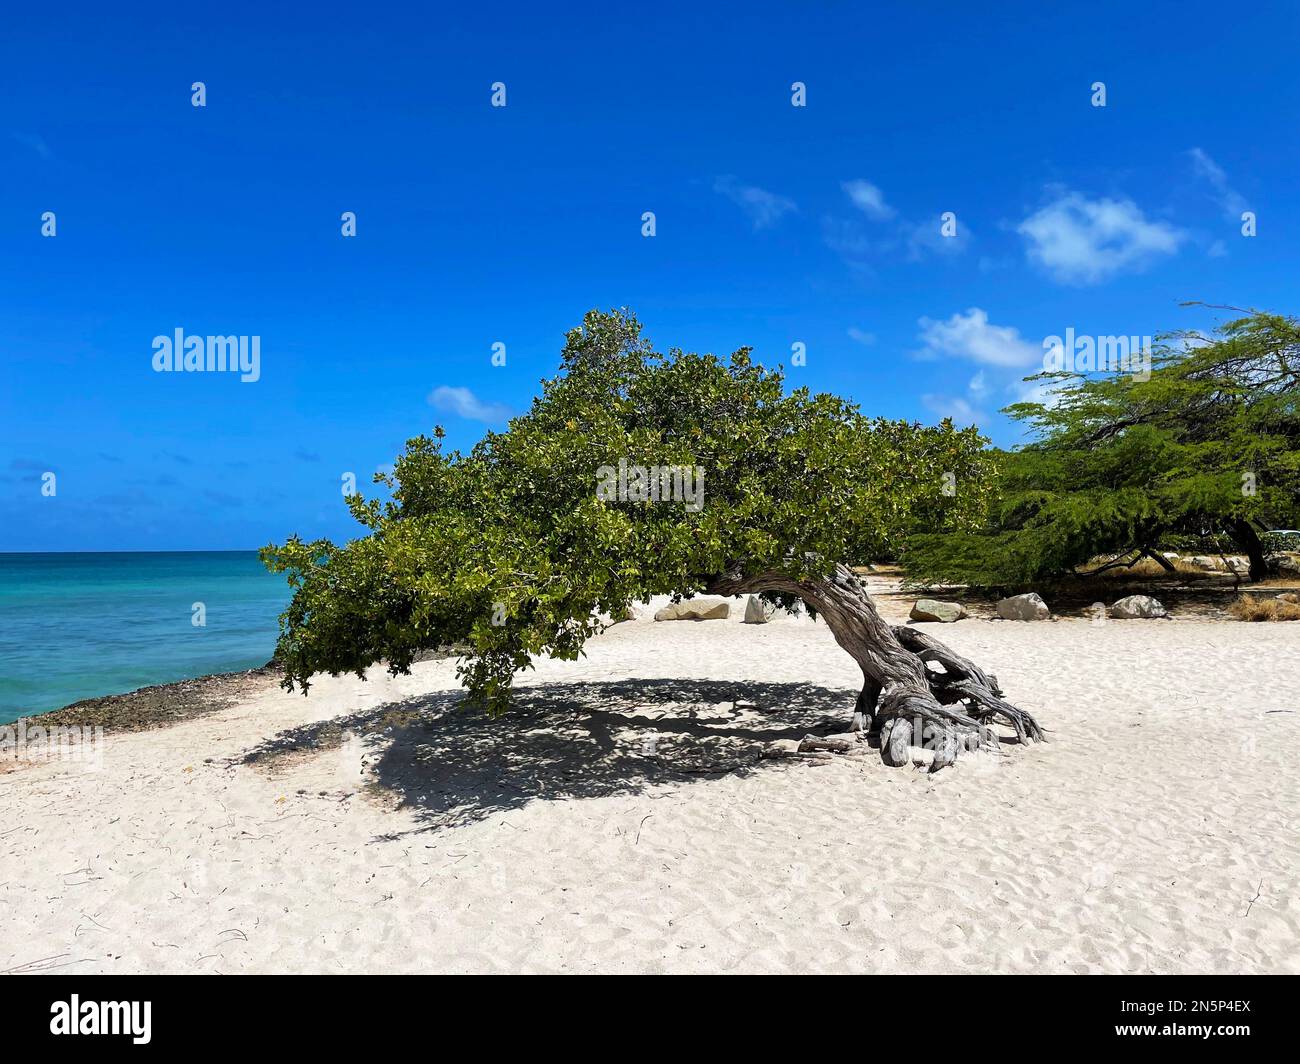 A Divi Tree on the beach, Eagle Beach, Aruba Stock Photo